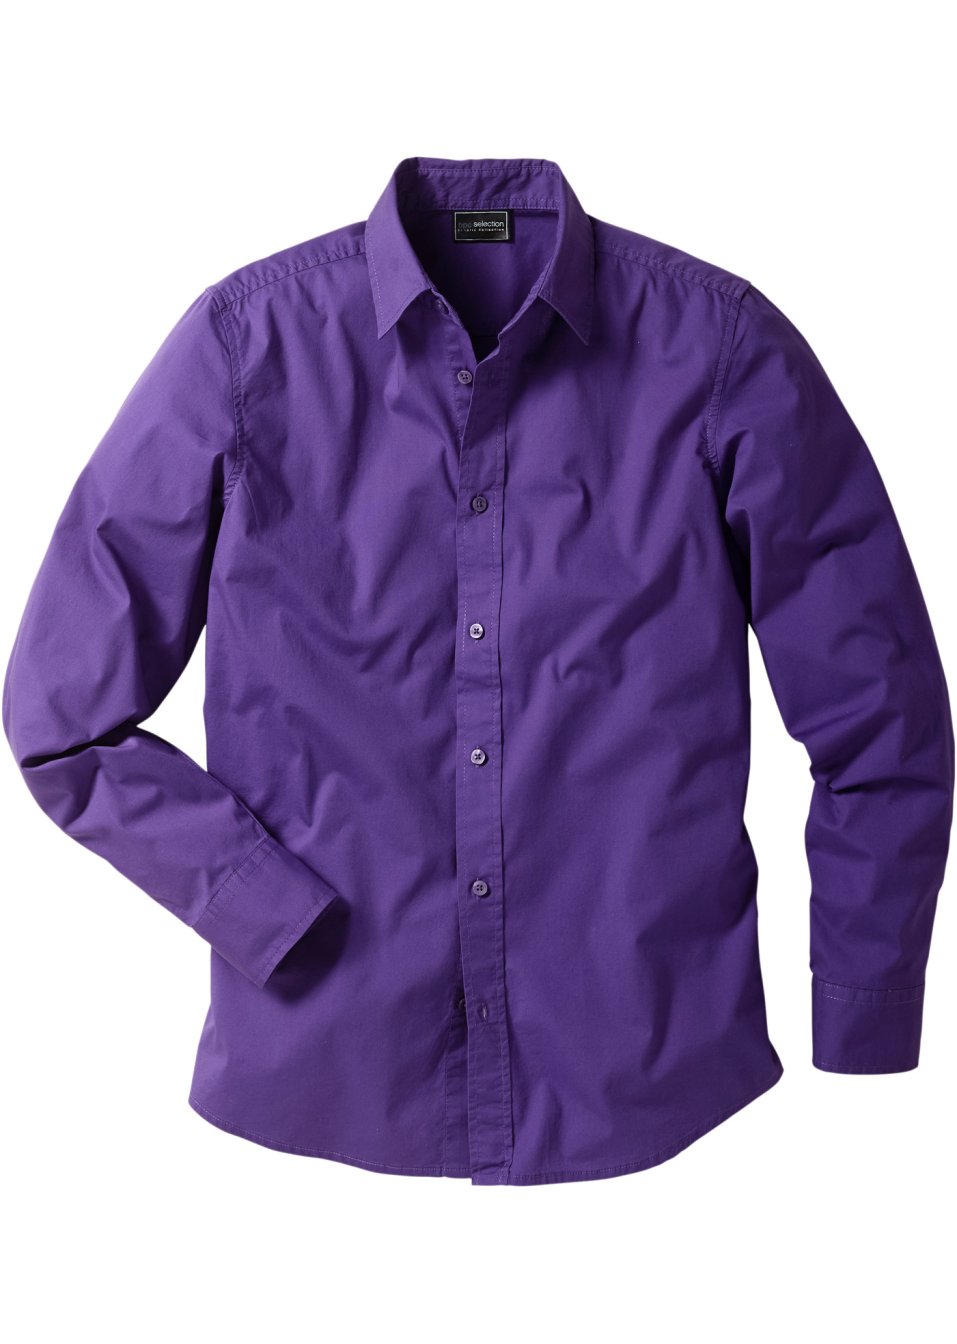 Рубашка стрейч. Bonprix рубашка стретч. Рубашка bonprix мужская. Рубашка стрейч мужская. Фиолетовая мужская рубашка.